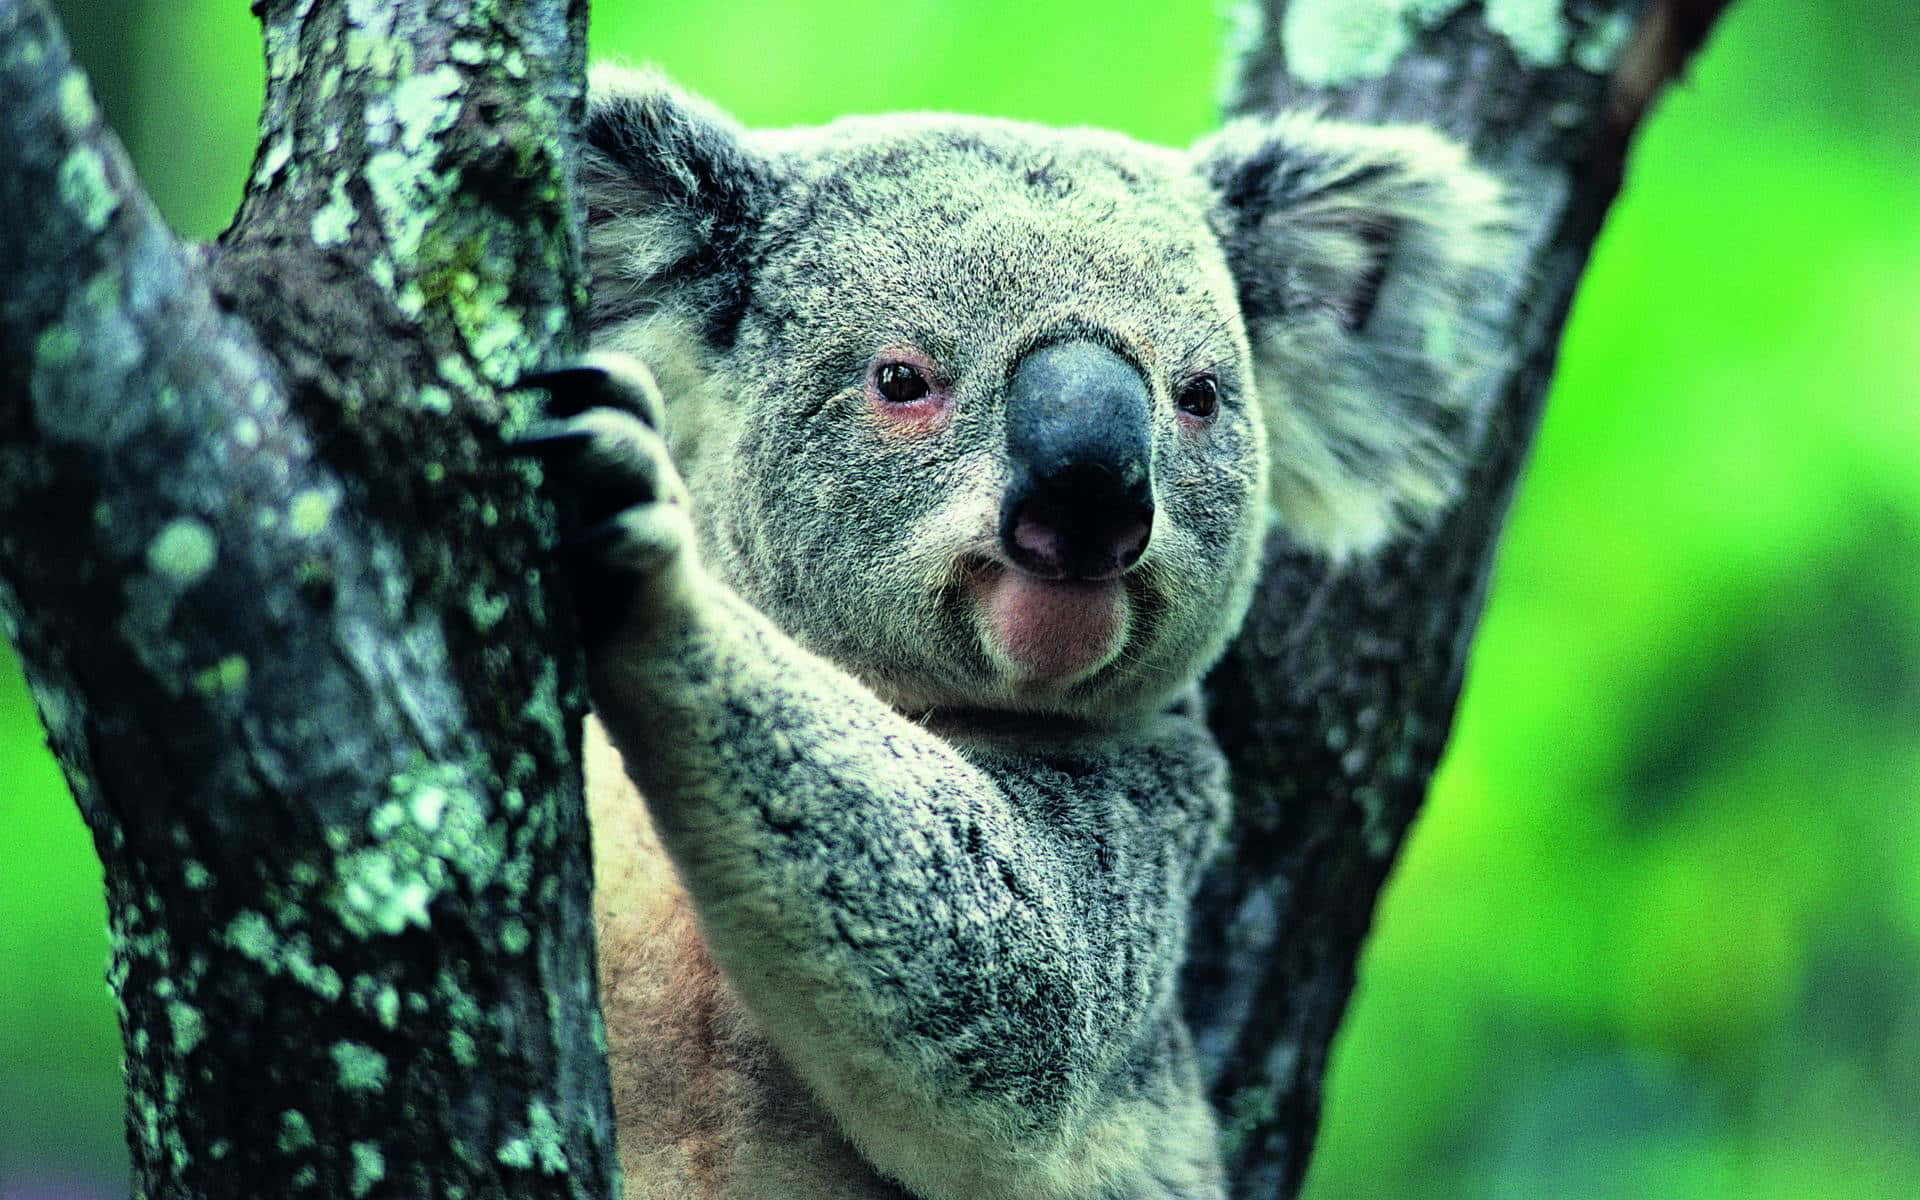 A solitary koala perched in an eucalyptus tree